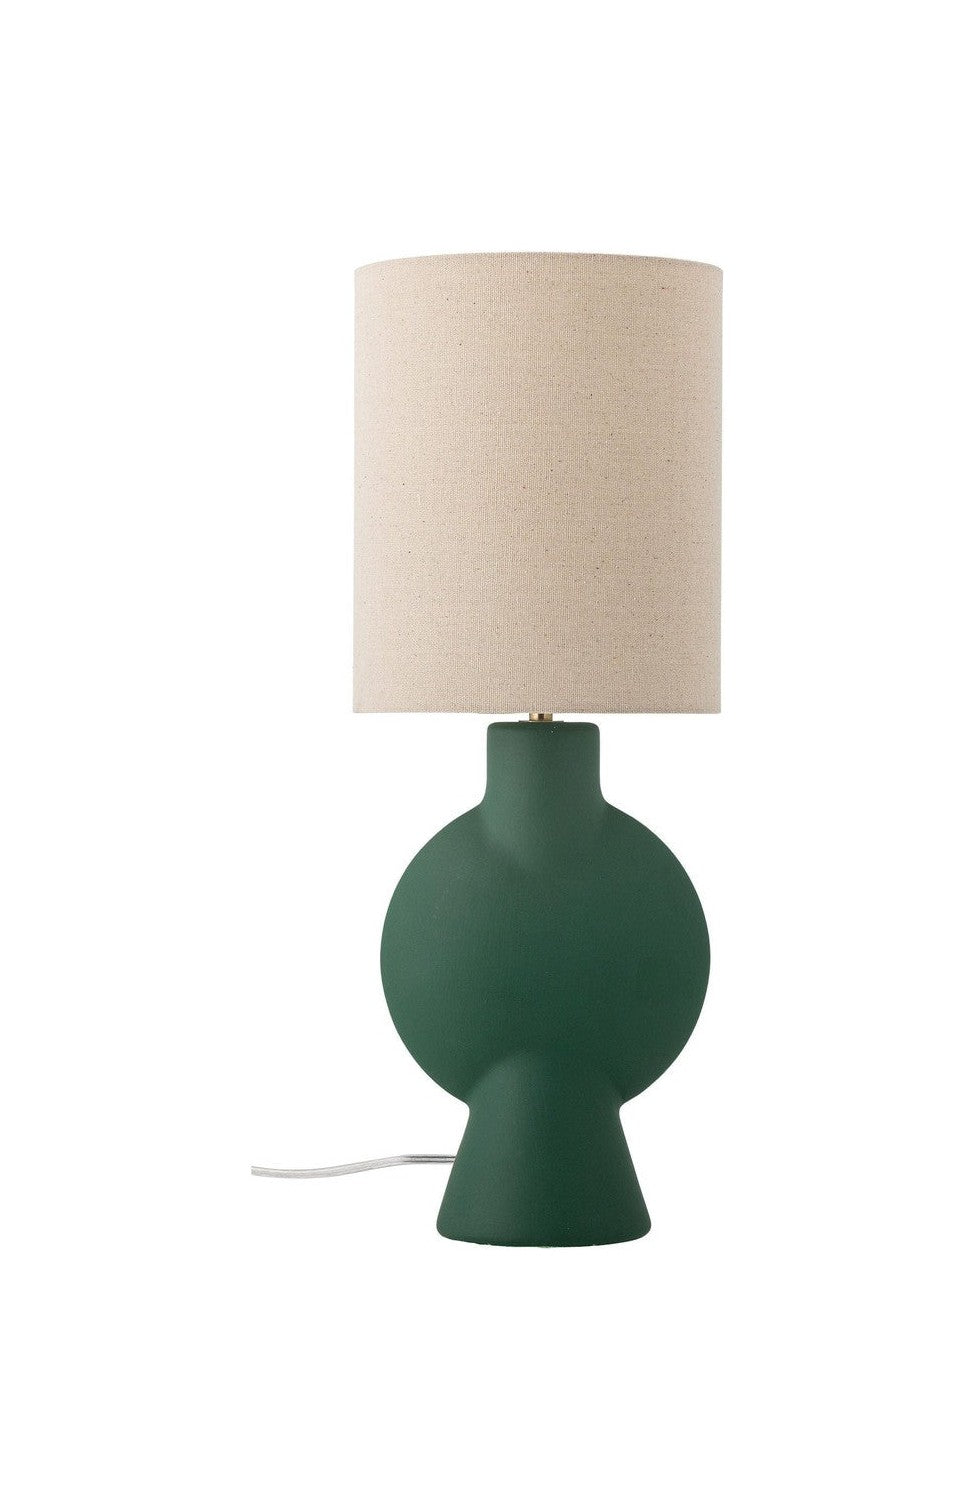 Bloomingville Sergio Table Lamp, grøn, stentøj